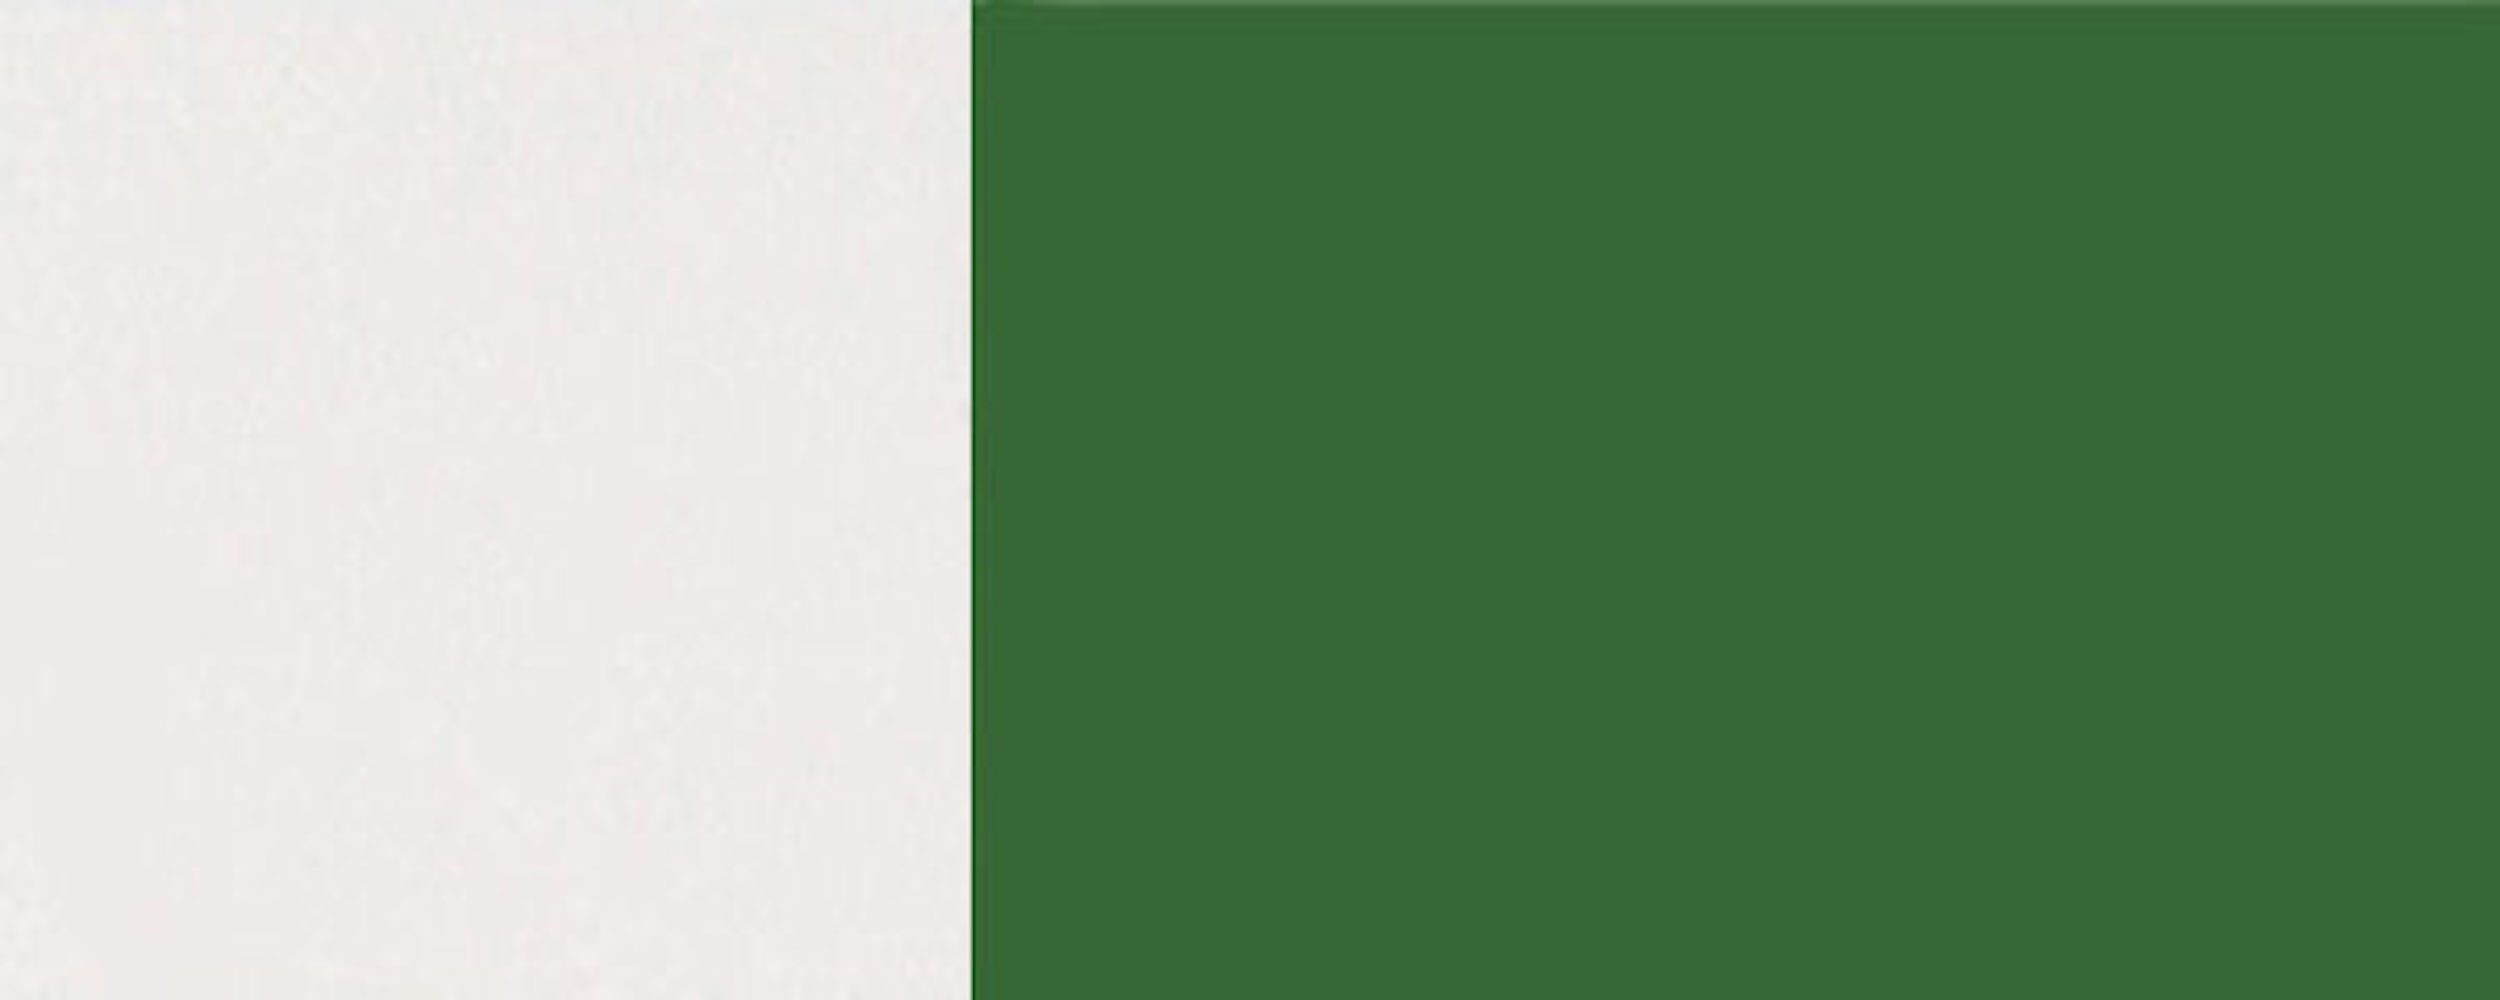 smaragdgrün grifflos RAL und 2-türig Front- (Florence) 80cm Klapphängeschrank Feldmann-Wohnen wählbar Hochglanz 6001 Florence Korpusfarbe